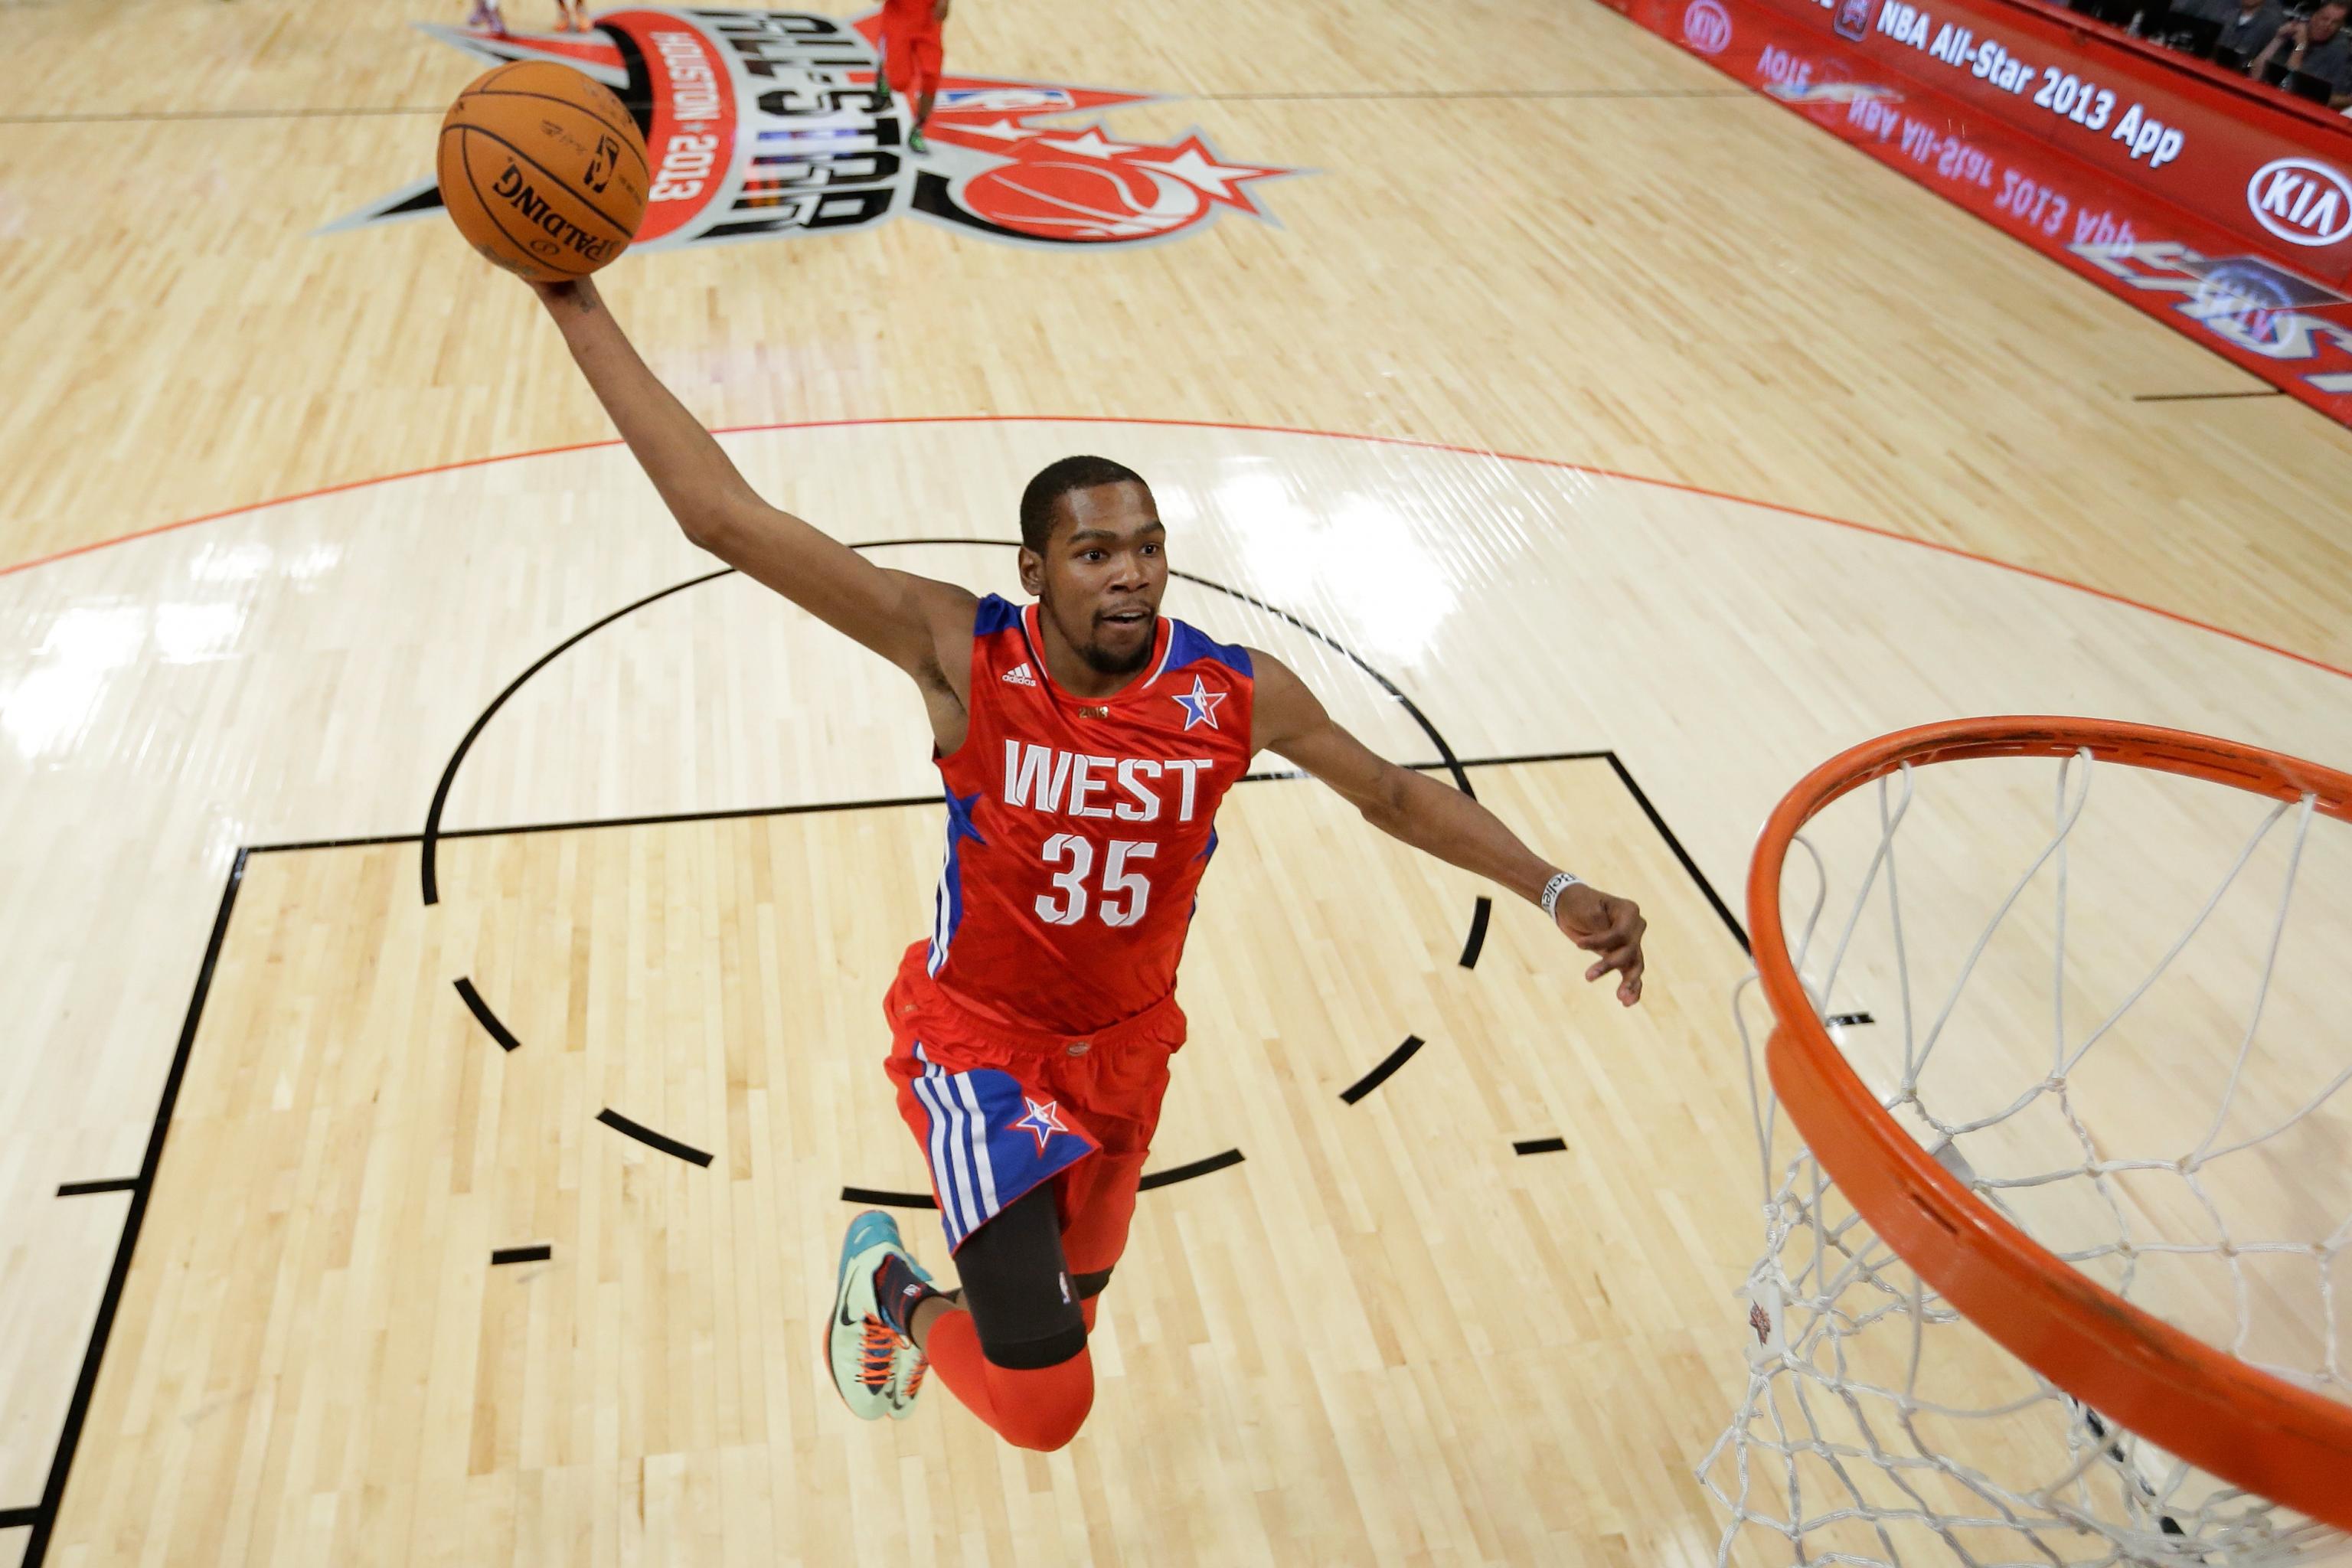 NEW Adidas 2014 NOLA NBA All Star East Carmelo Anthony Knicks